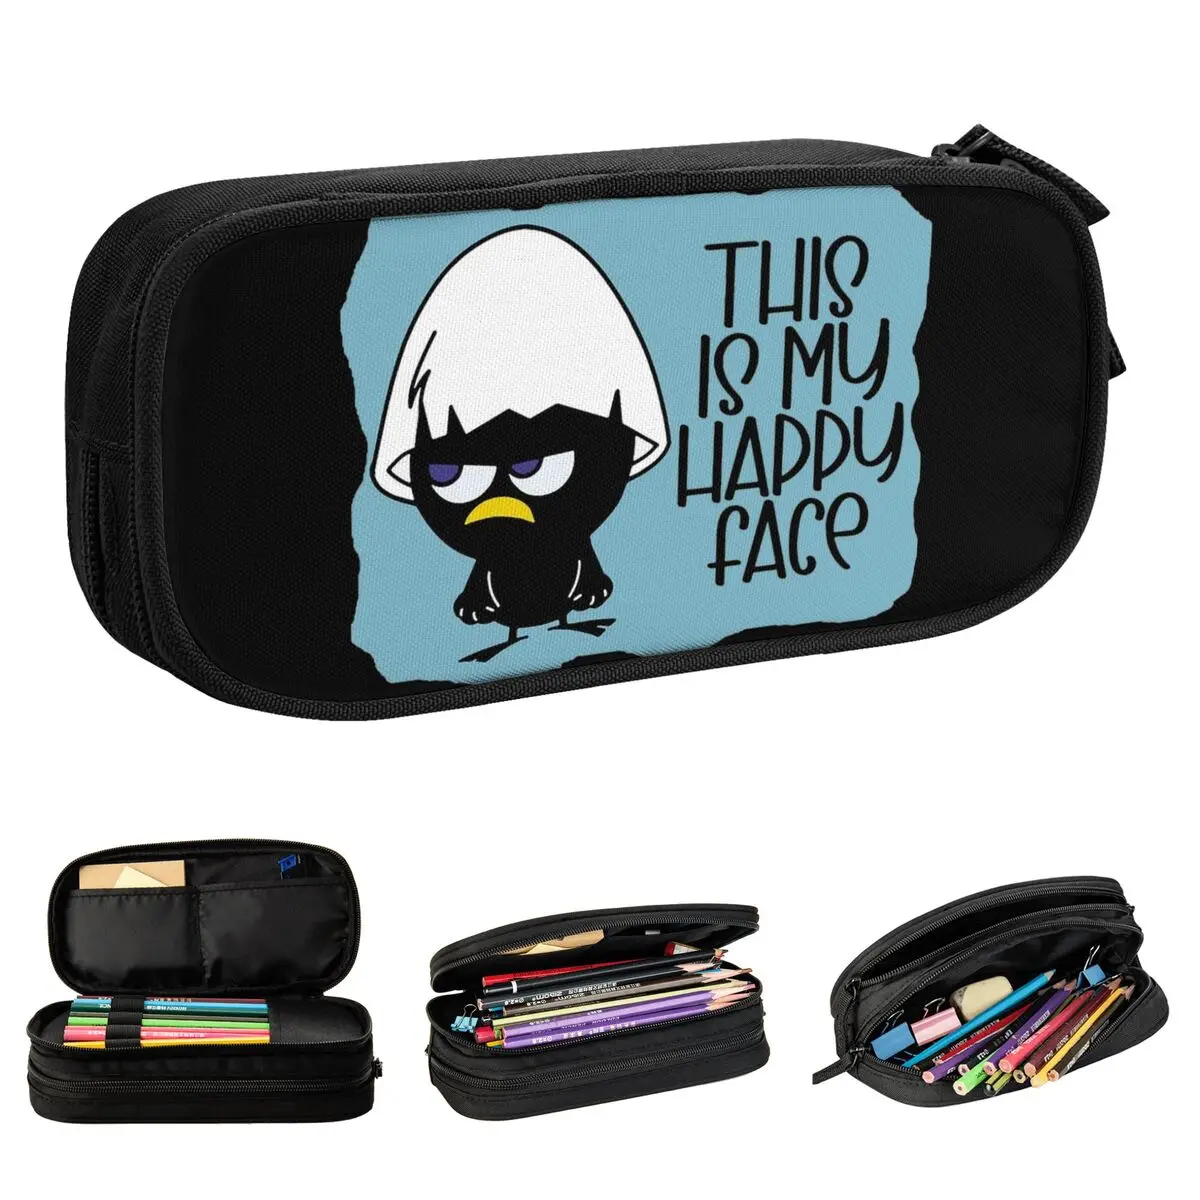 

Happy Face Calimero Pencil Case Pen Holder Bag Student Big Capacity School Supplies Cosmetic Pencil Box